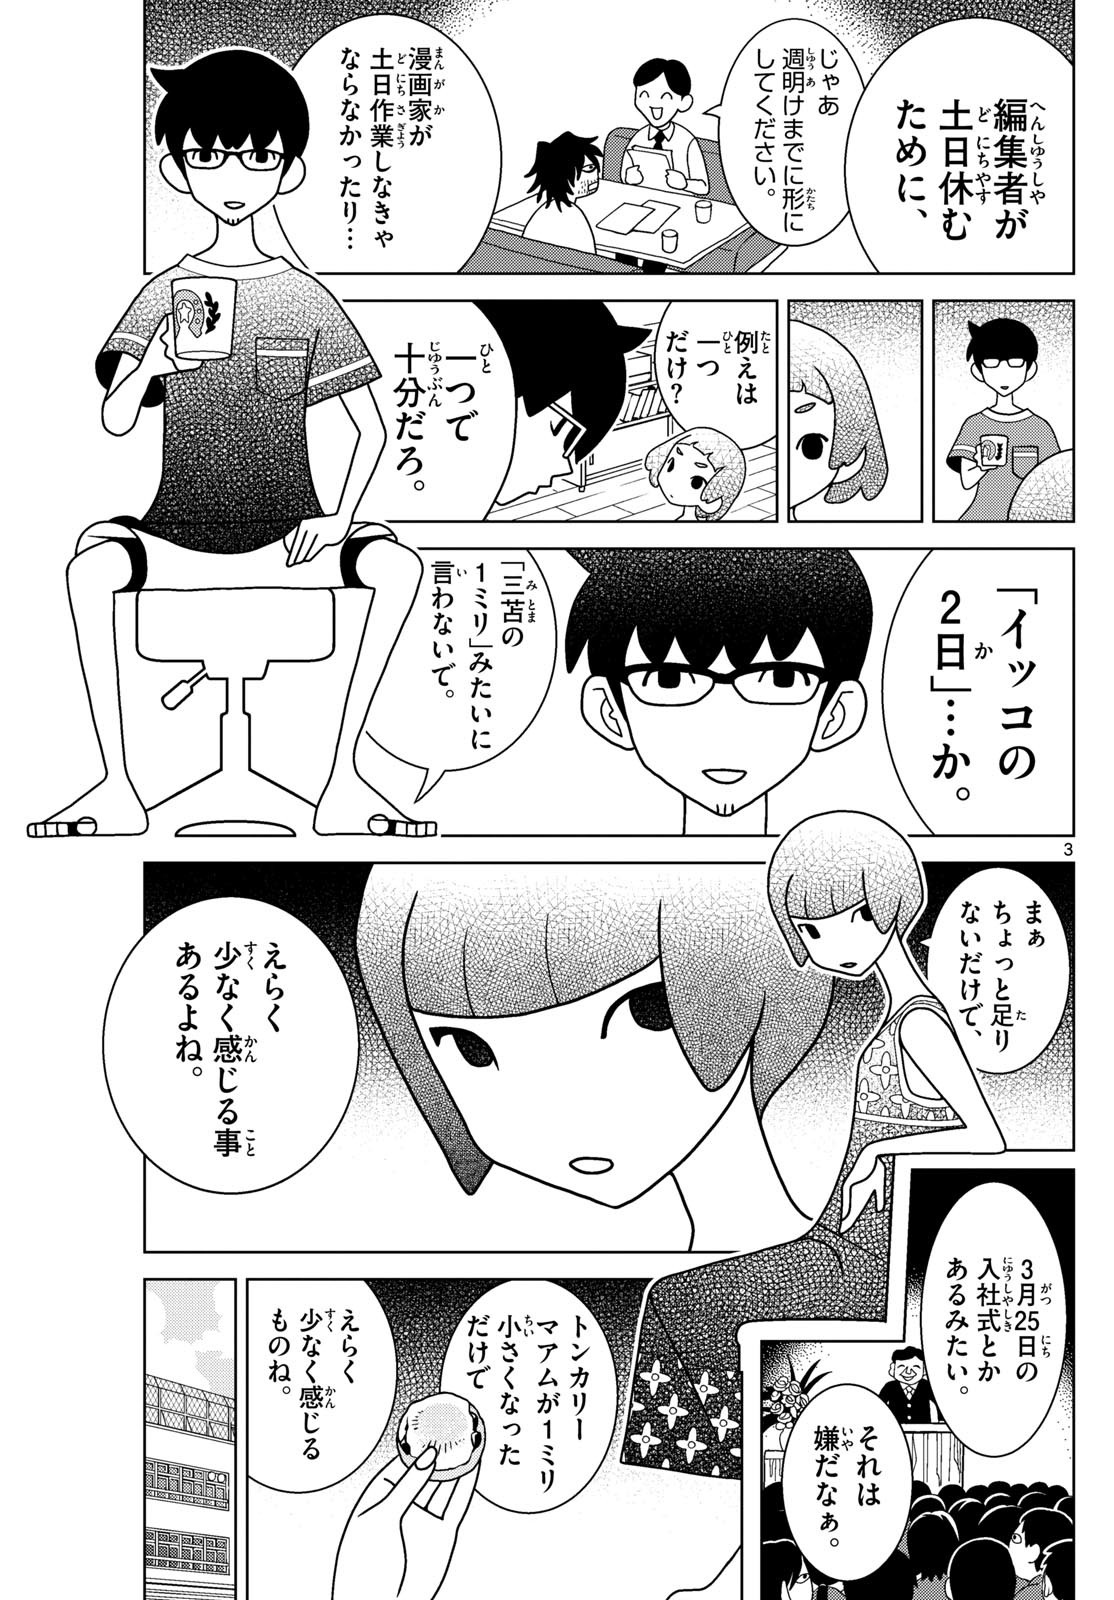 Shibuya Near Family - Chapter 069 - Page 3